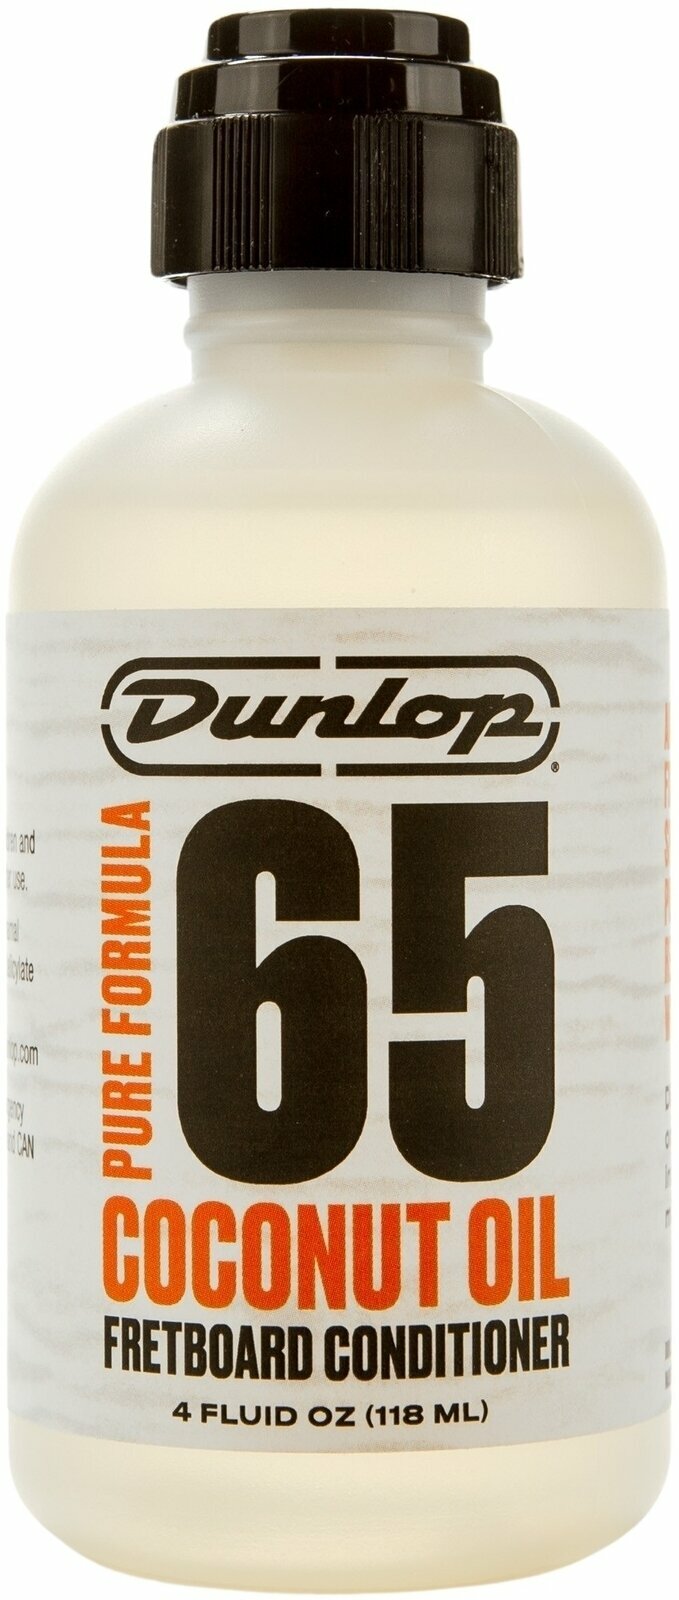 Reinigungsmittel Dunlop Pure Formula 65 Coconut Oil